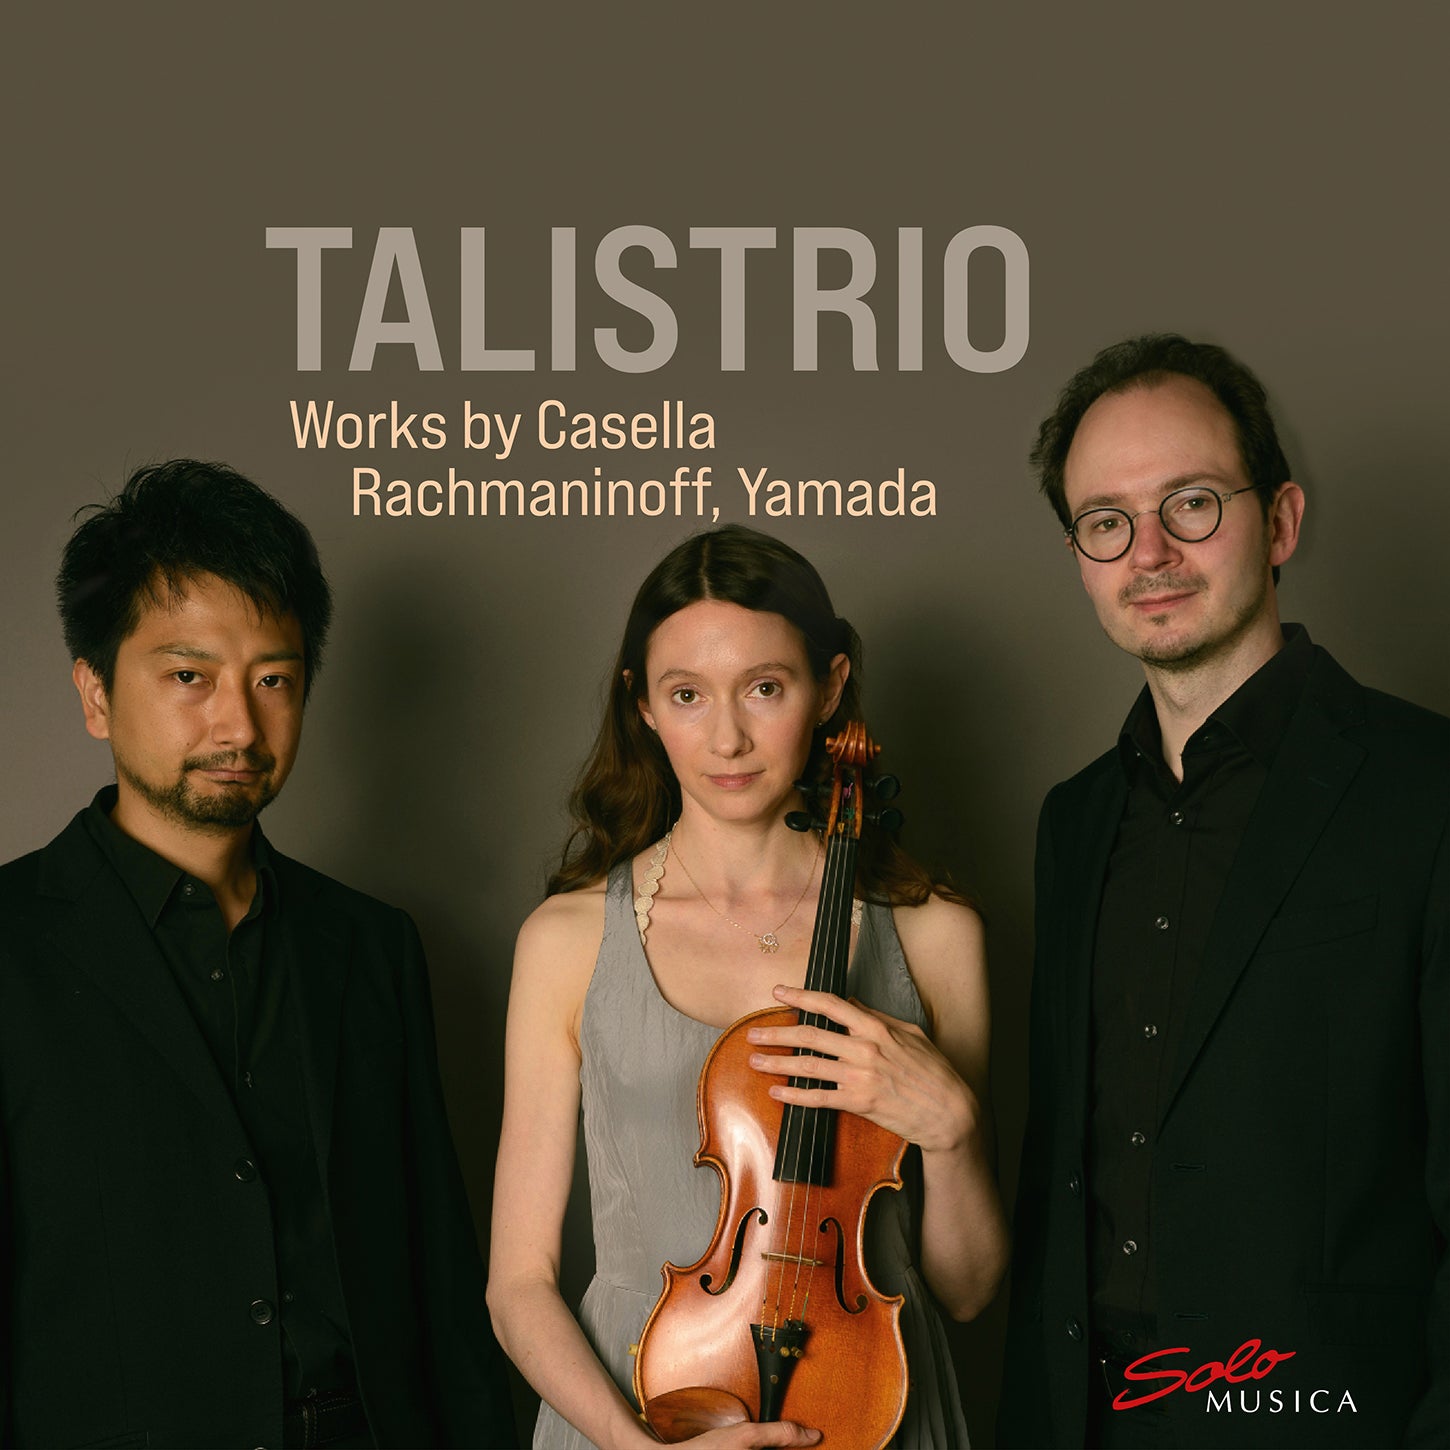 Casella, Rachmaninoff & Yamada: Works / Talistrio